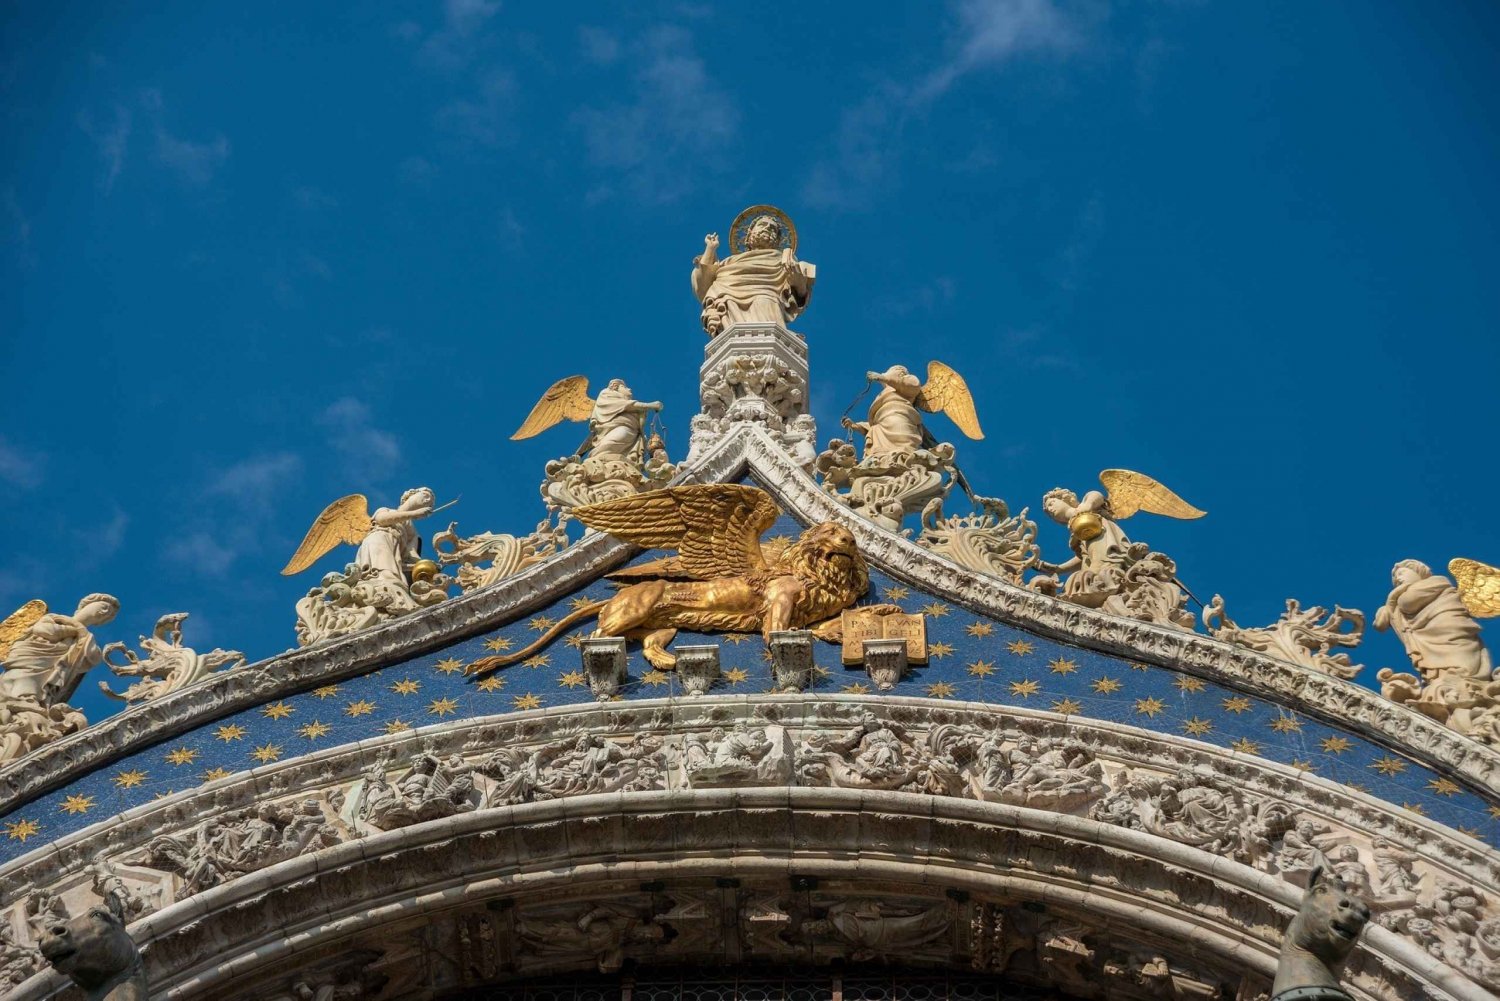 Venice: Doge's Palace with St. Mark's Basilica & Gondolas